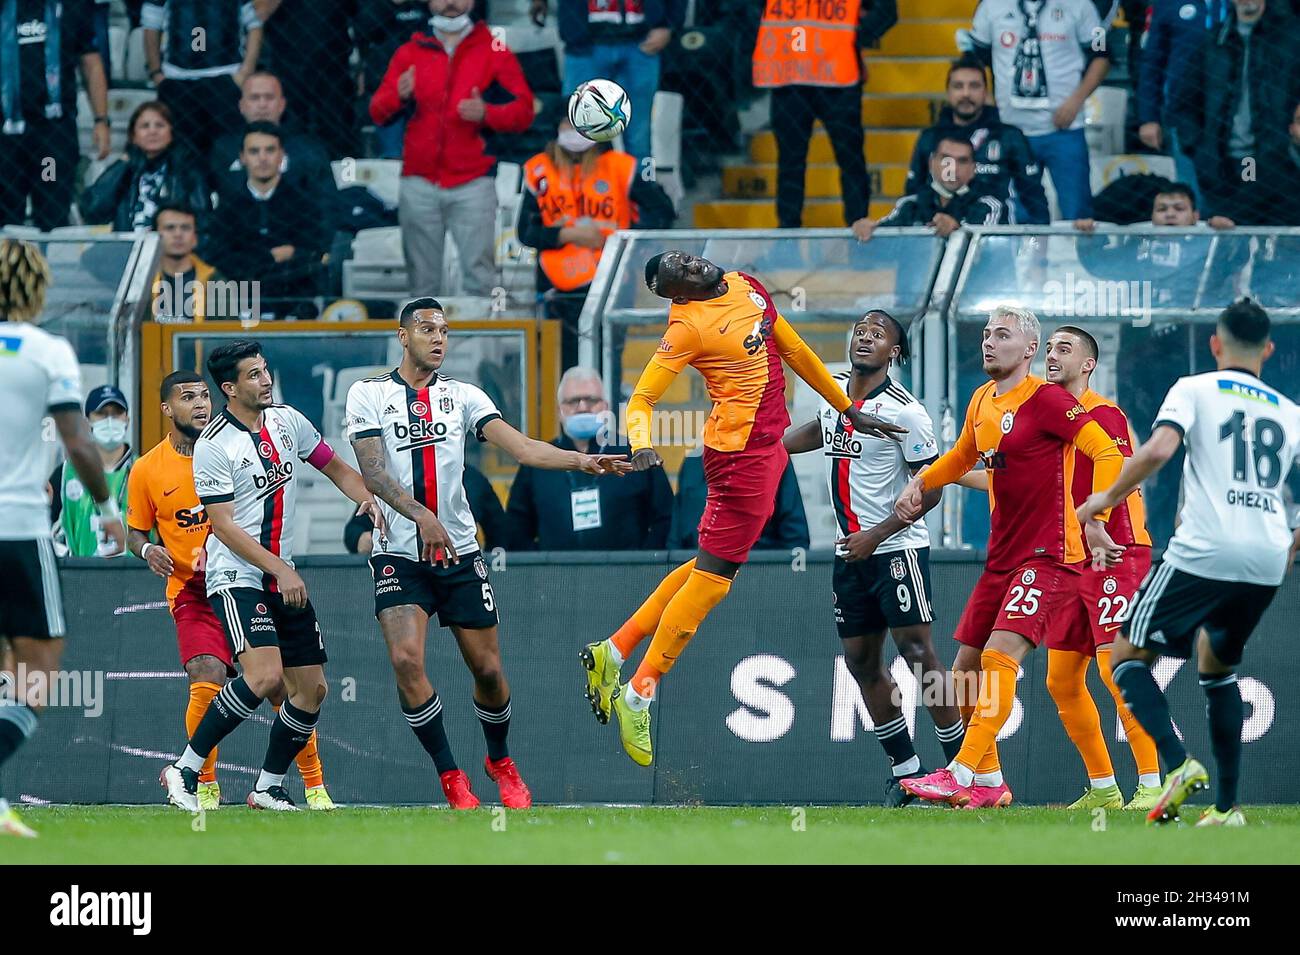 ISTANBUL, TÜRKEI - 25. OKTOBER: Mbaye Diagne von Galatasaray A.S.